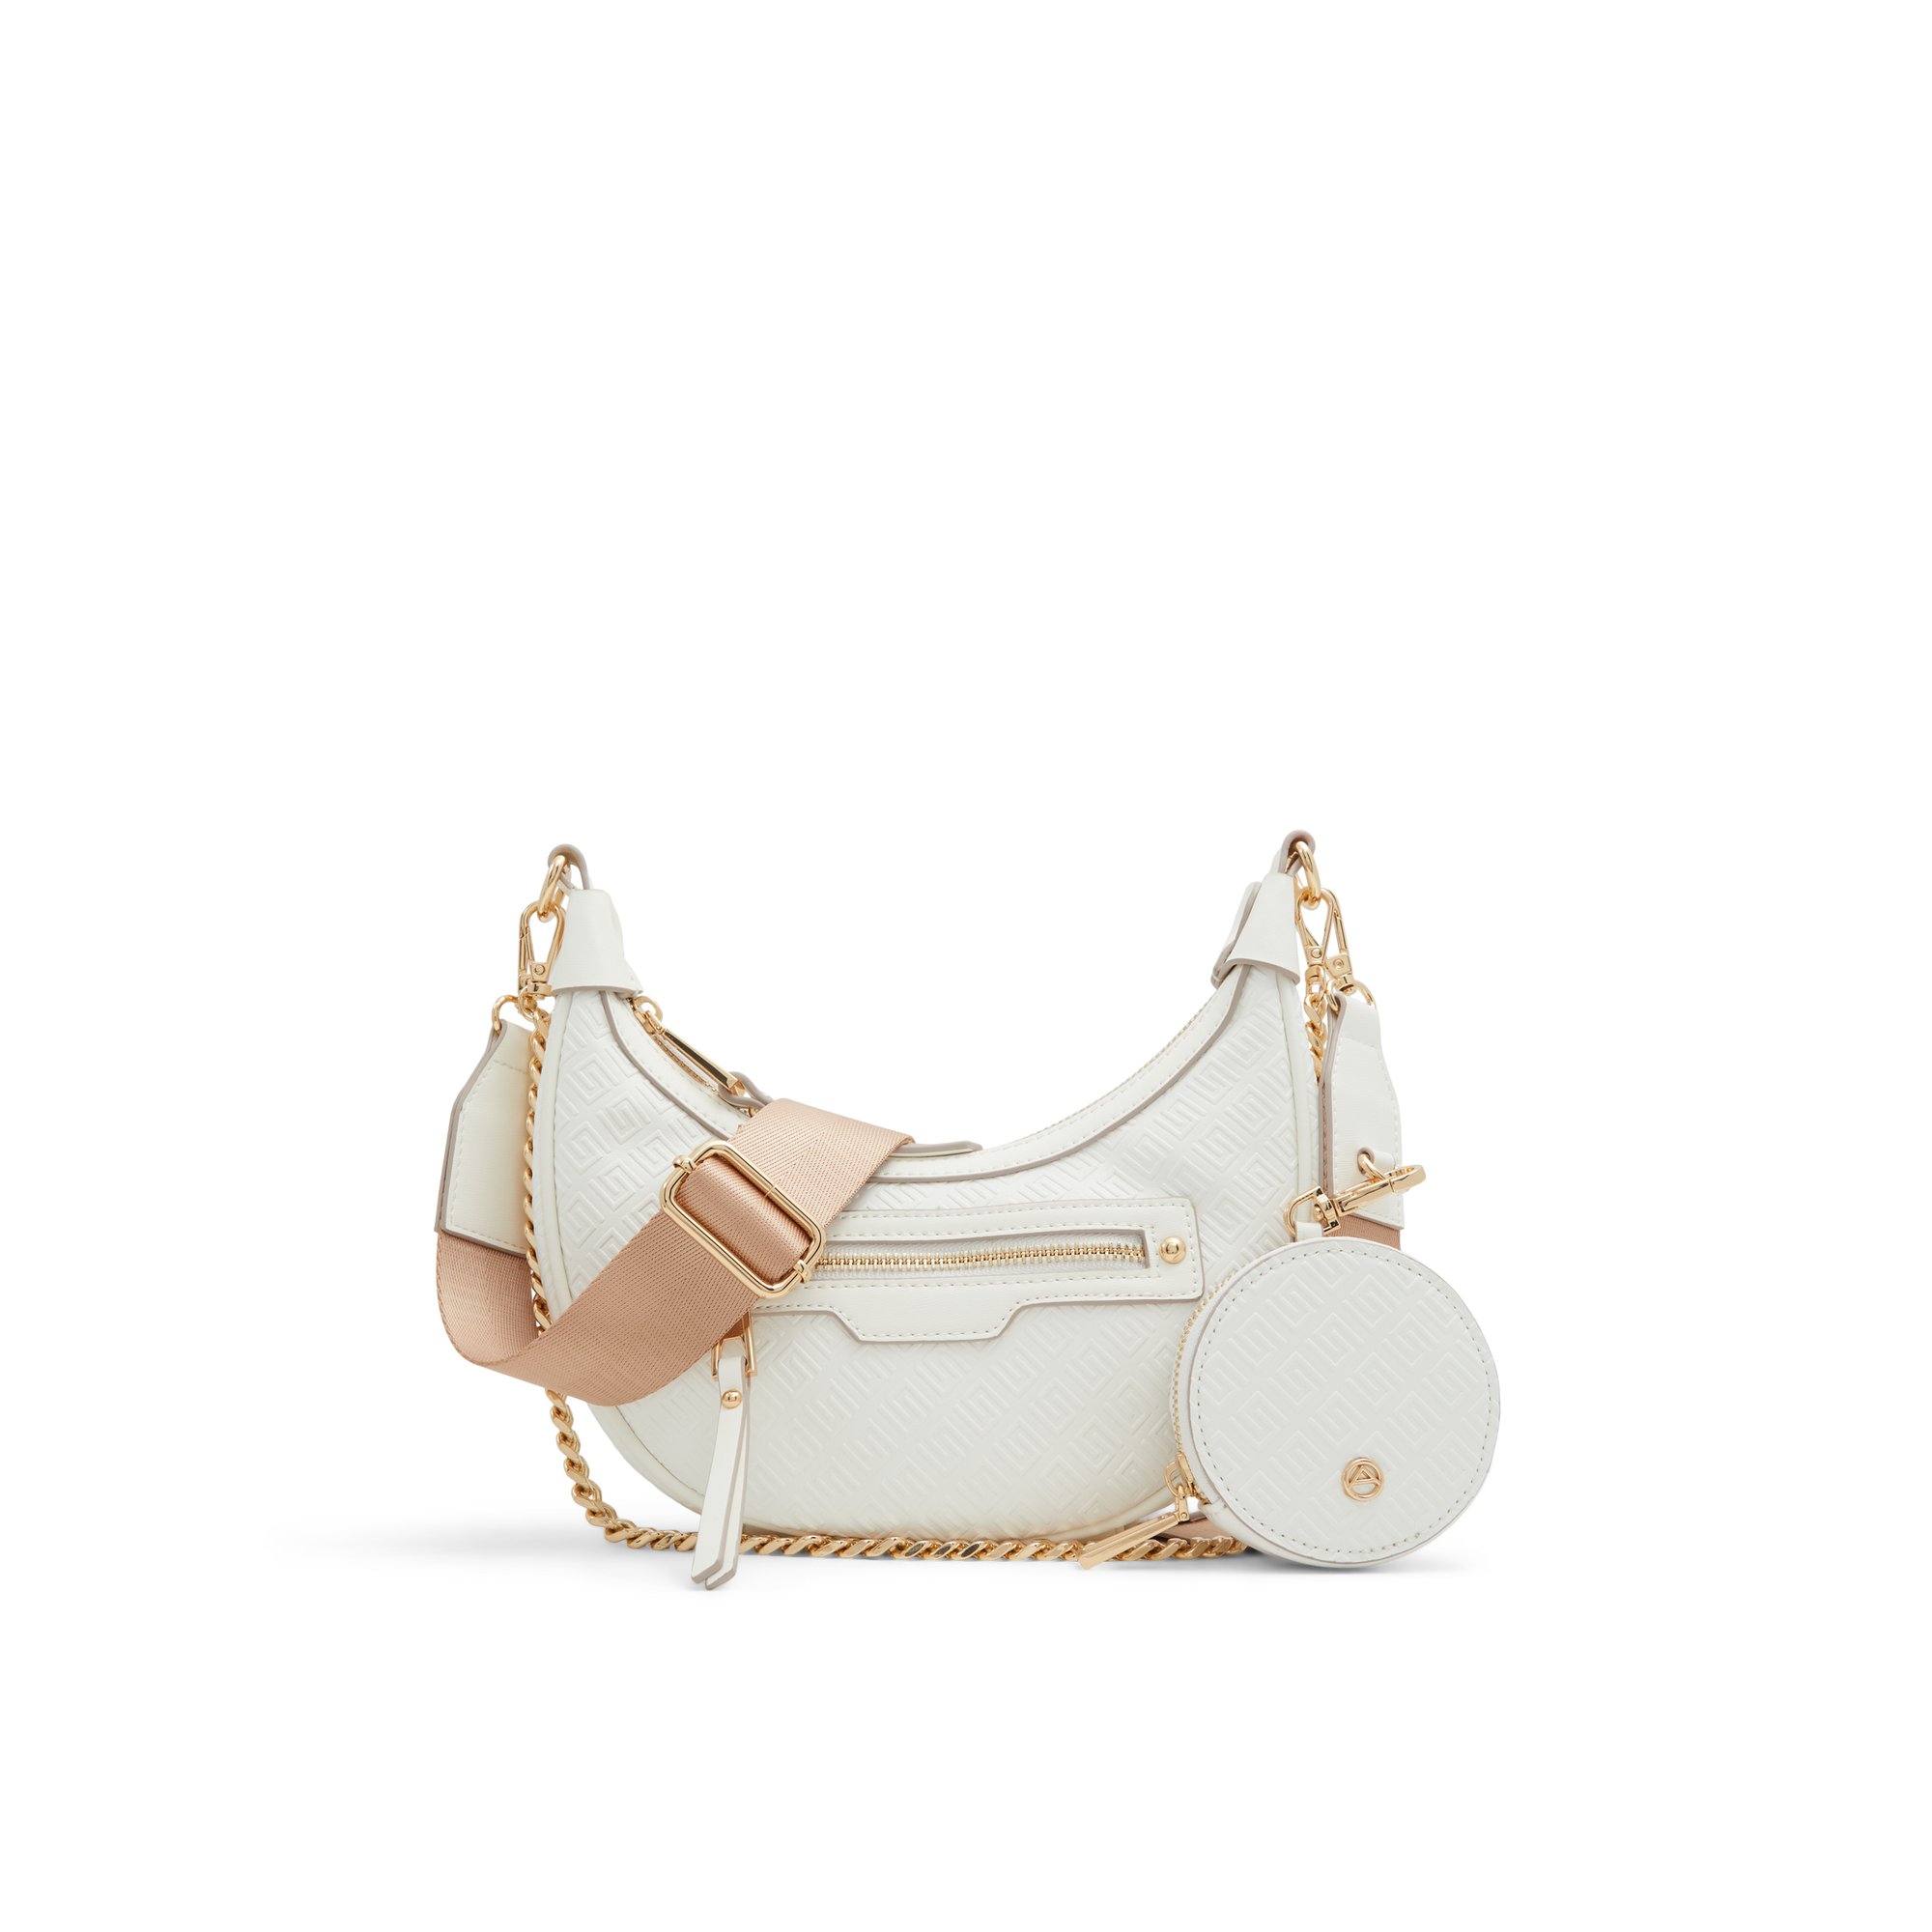 ALDO Prentonx - Women's Crossbody Handbag - White